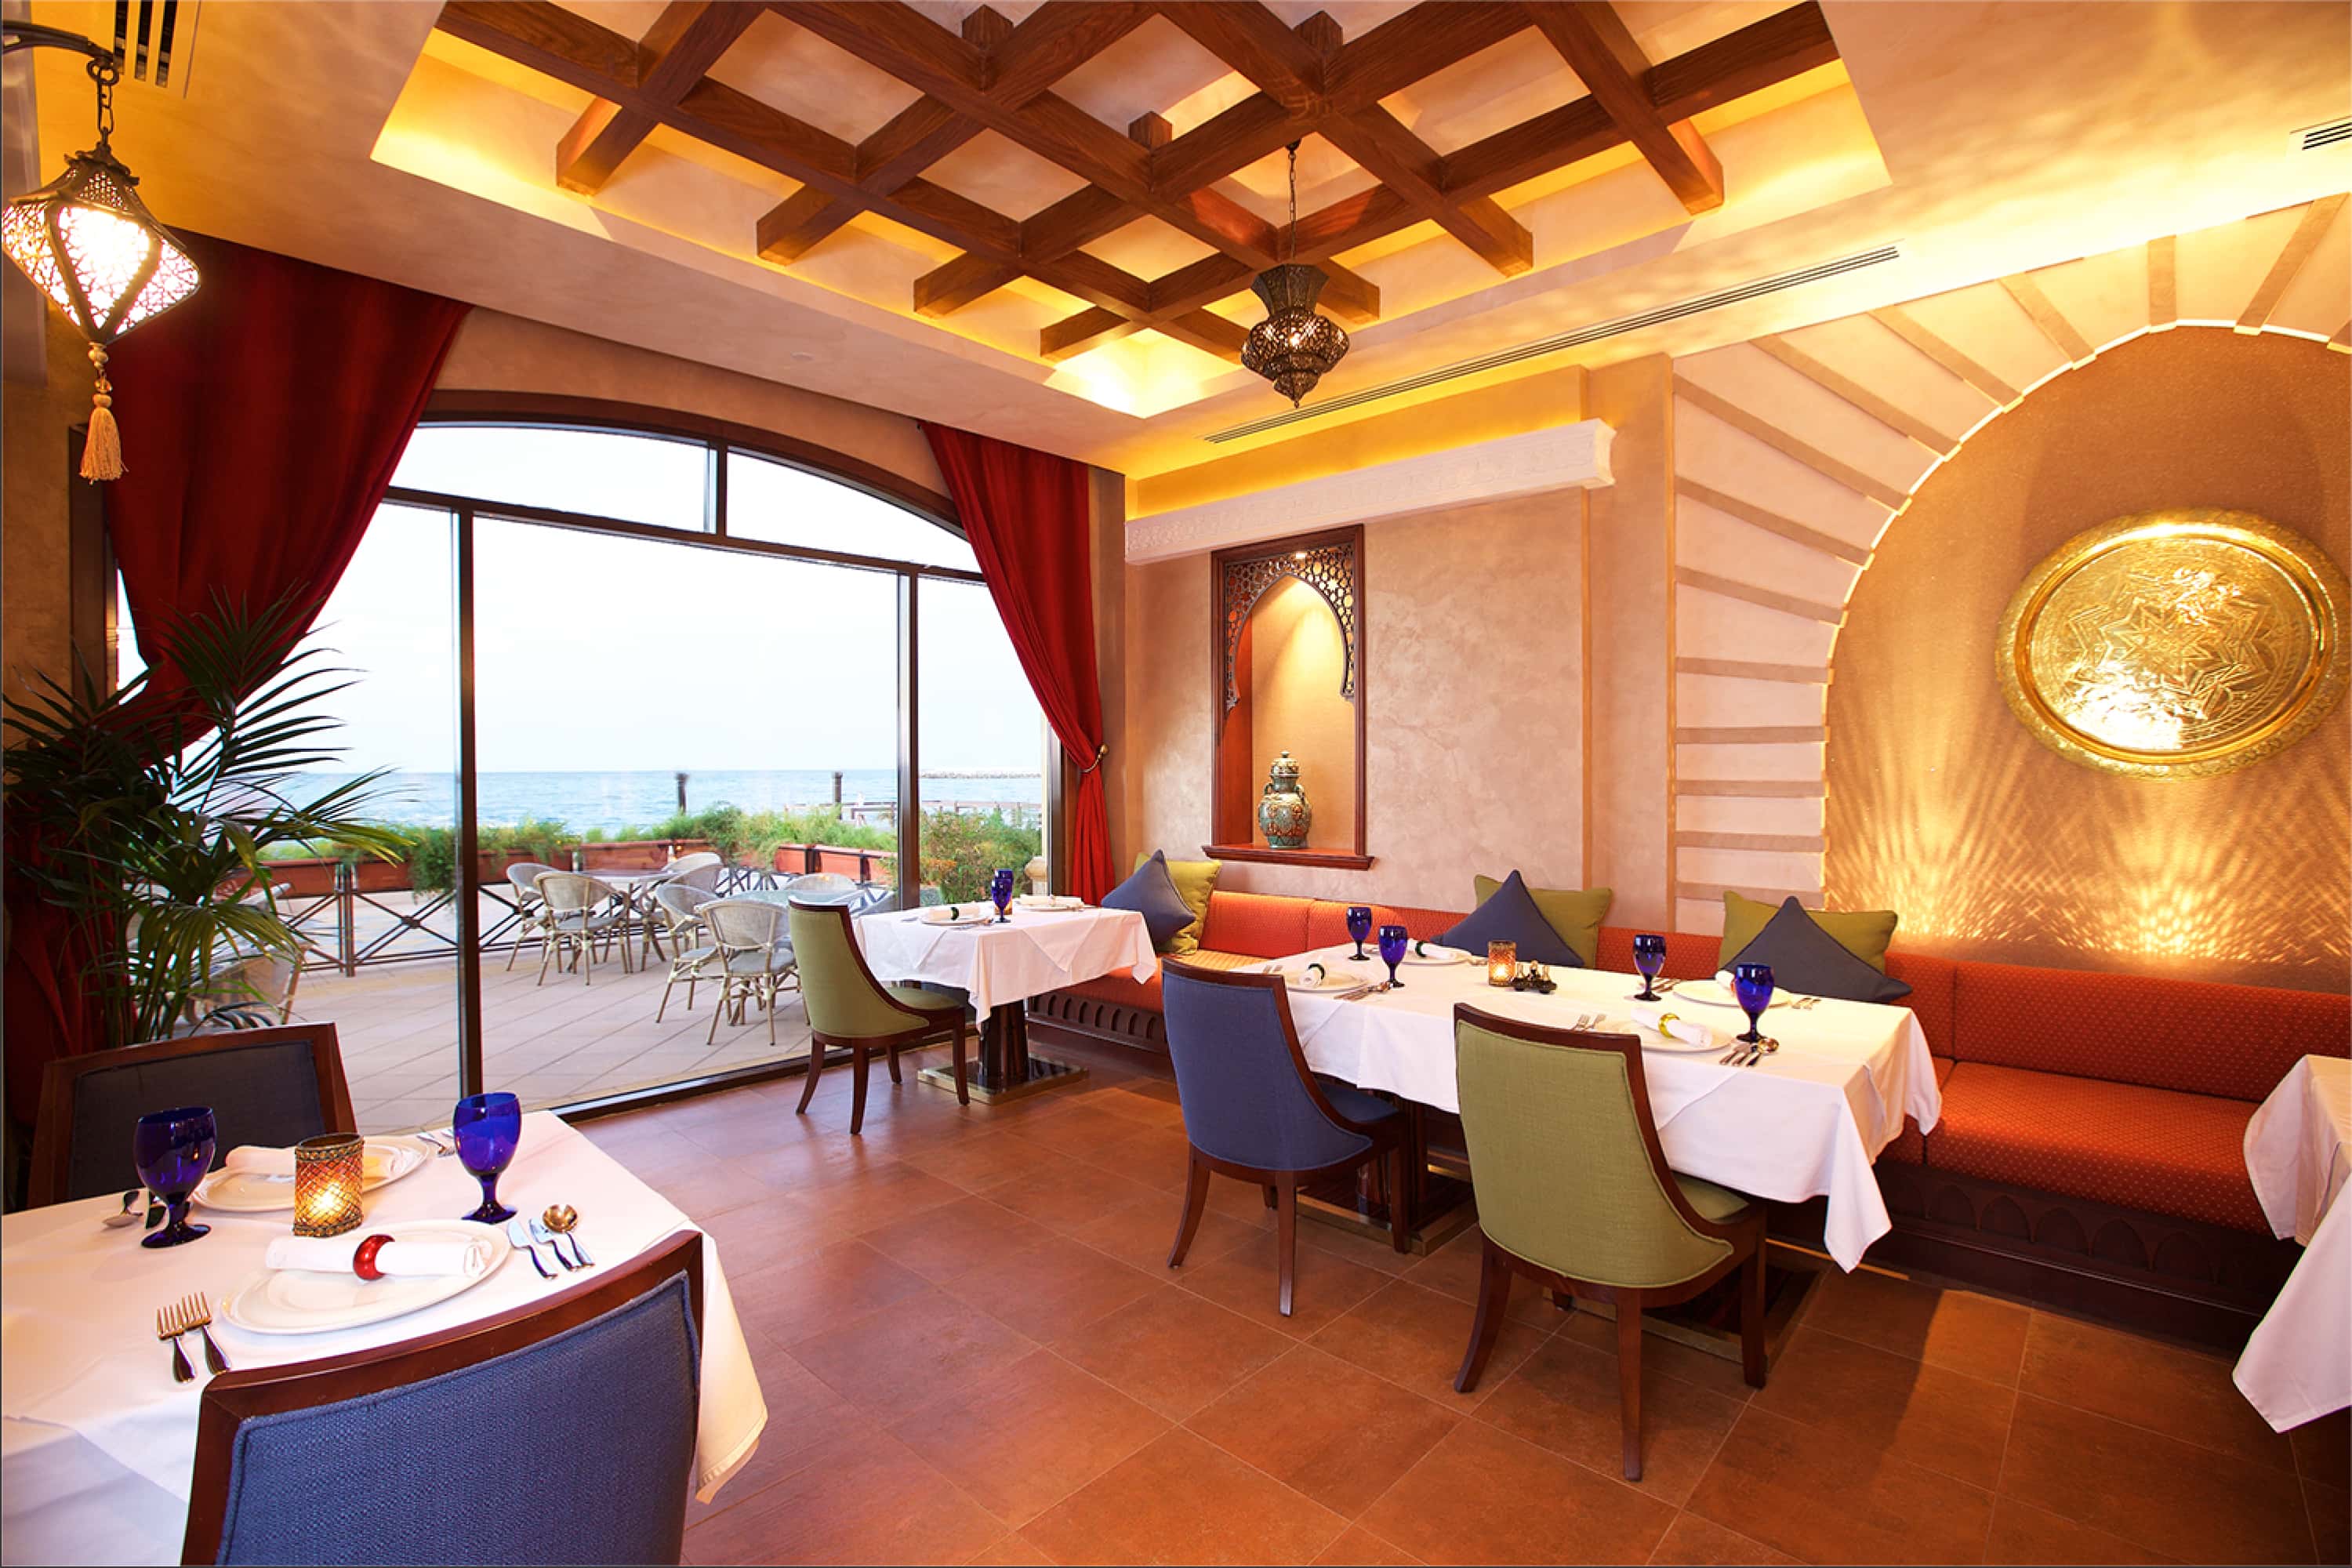 Marjan Island Resort & Spa Managed by Accor Hotels - Dinning